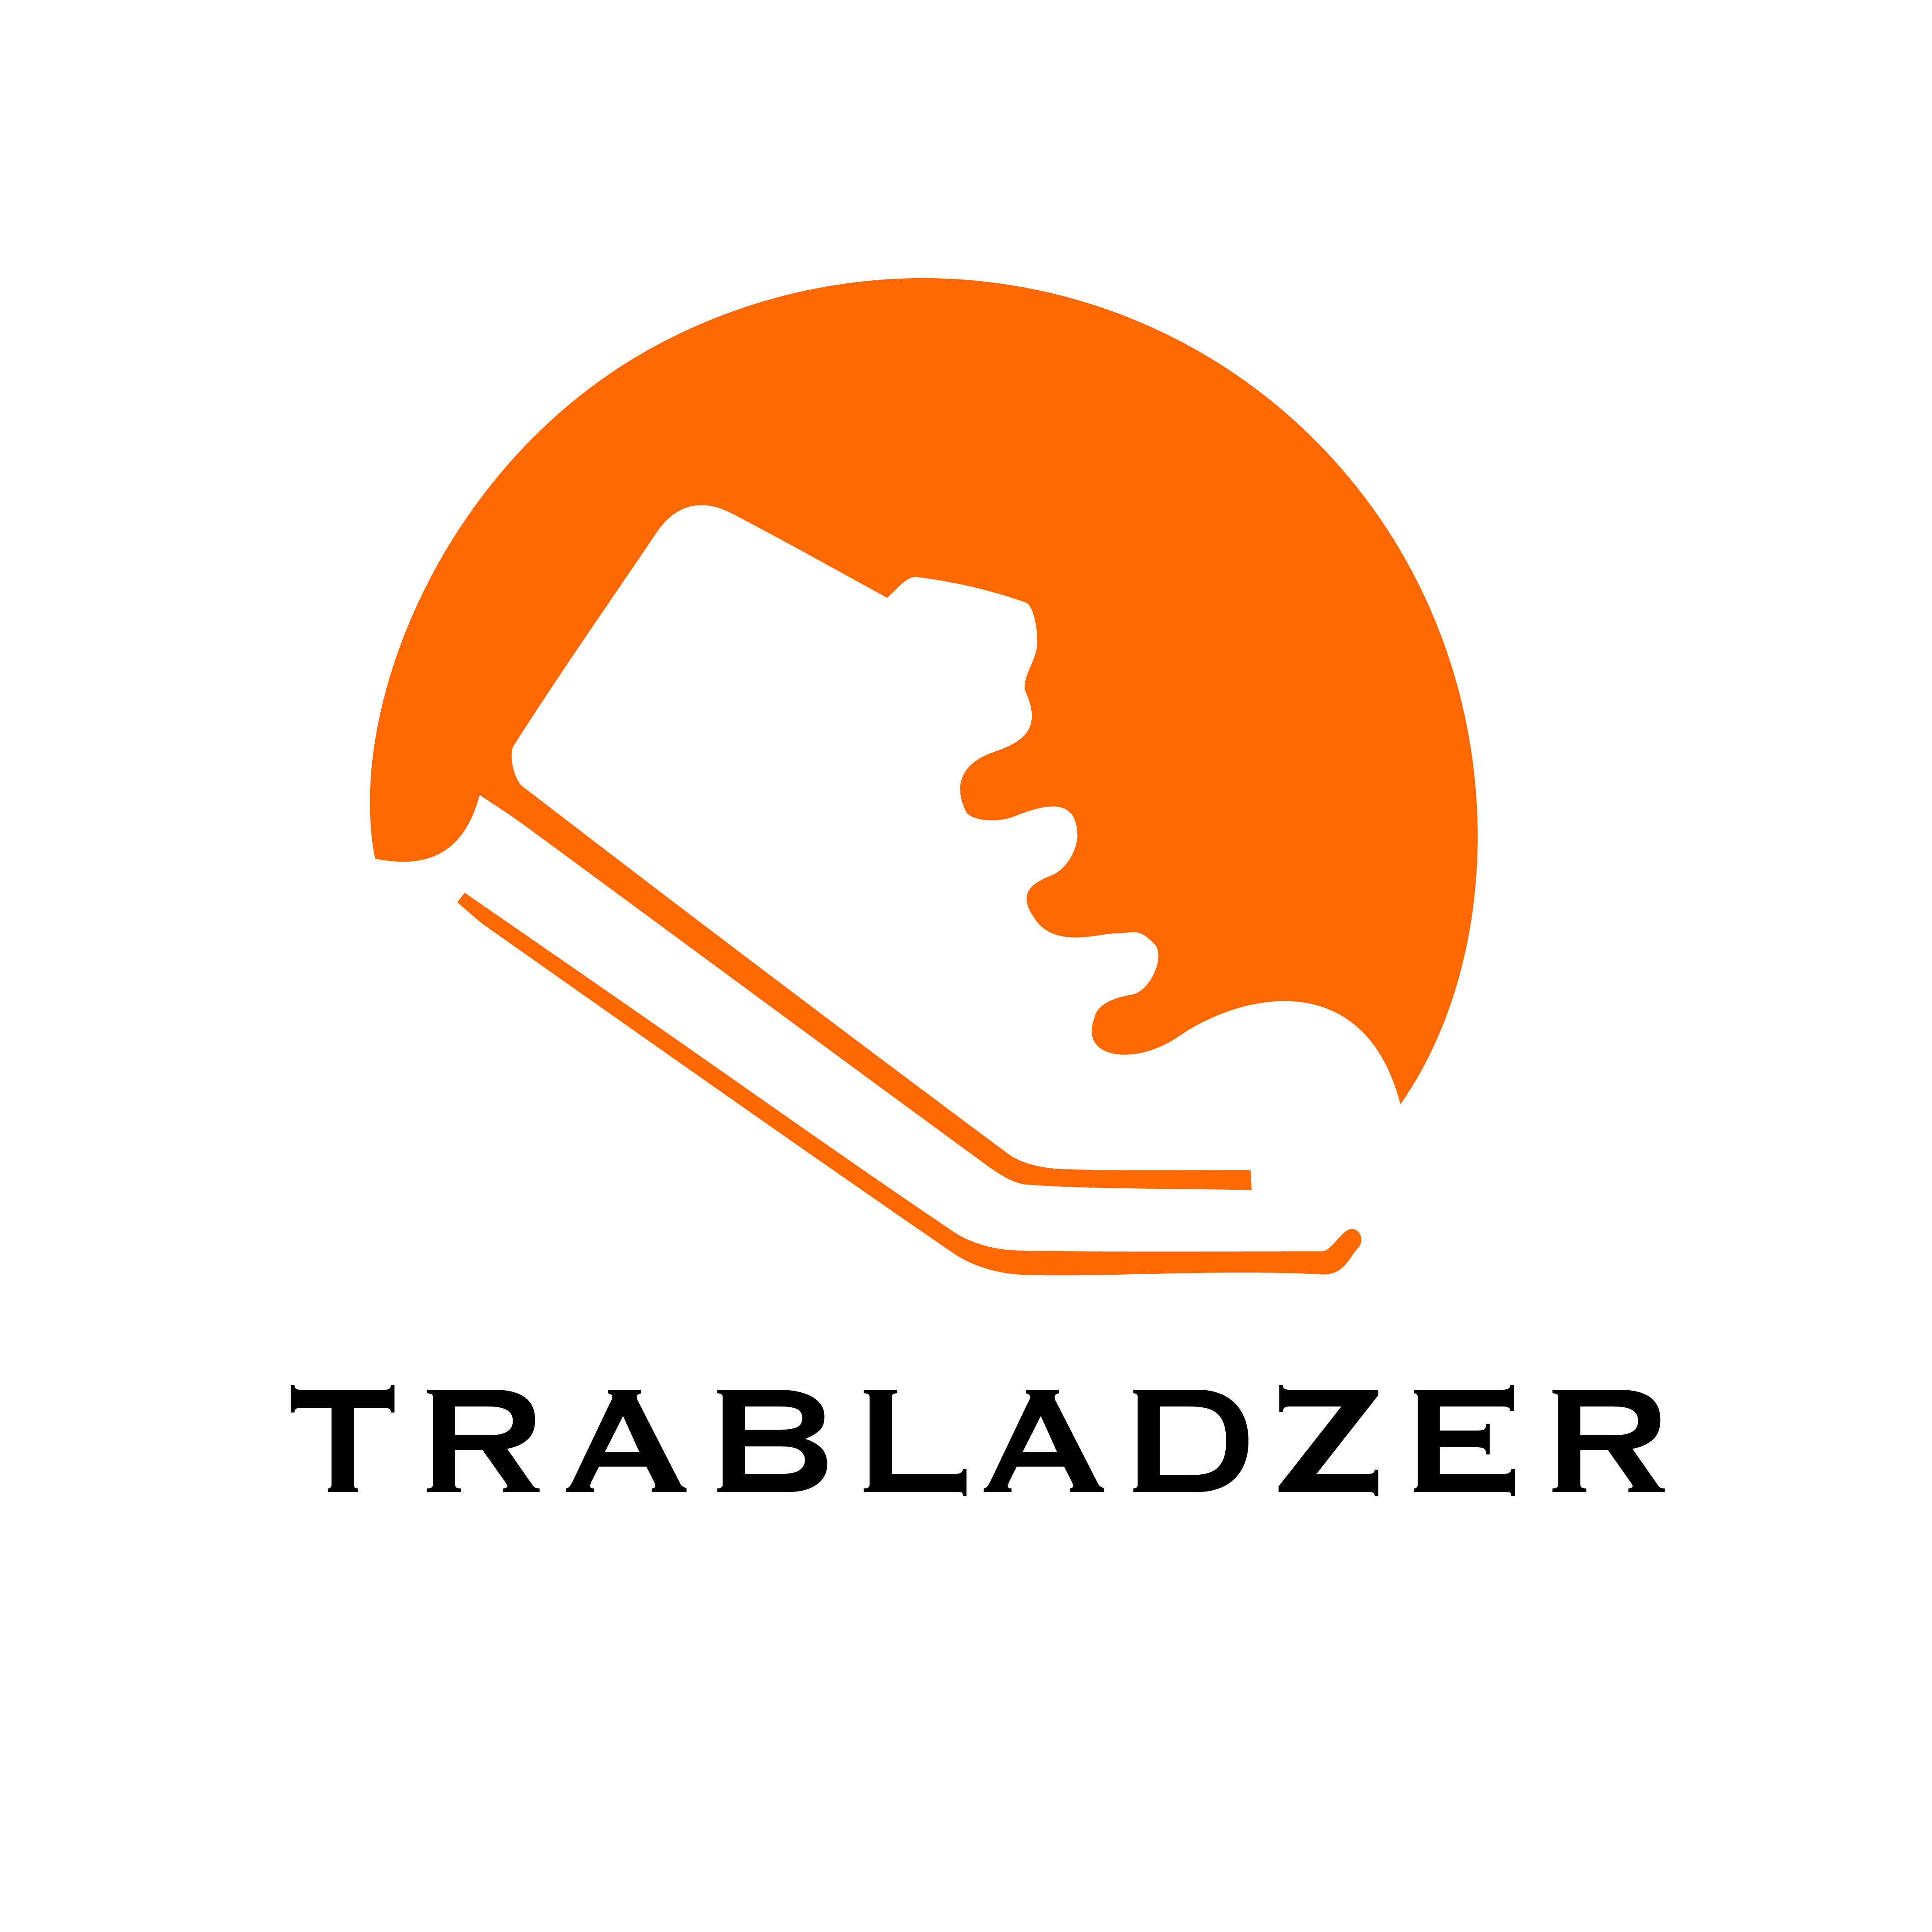 trabladzer logo